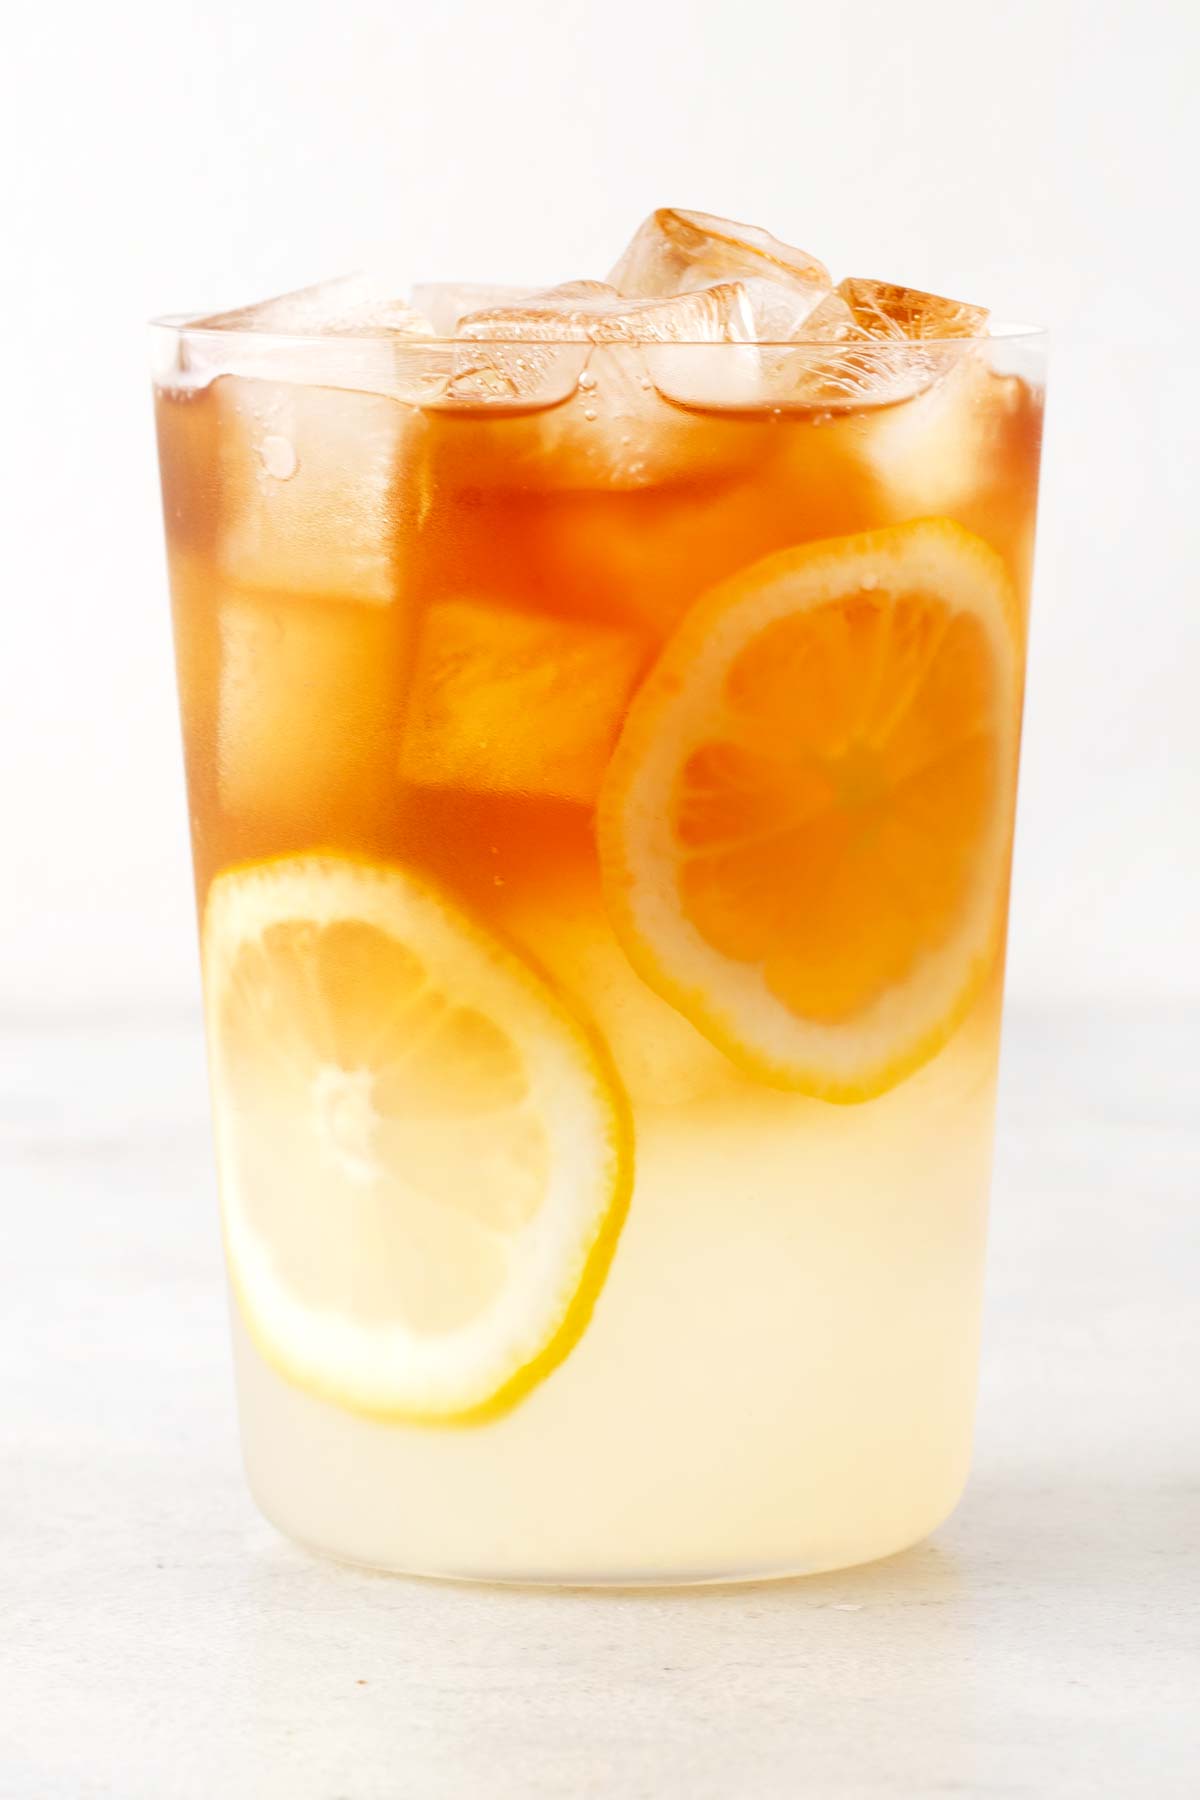 Mint Lemonade in clear glass with sliced lemons.